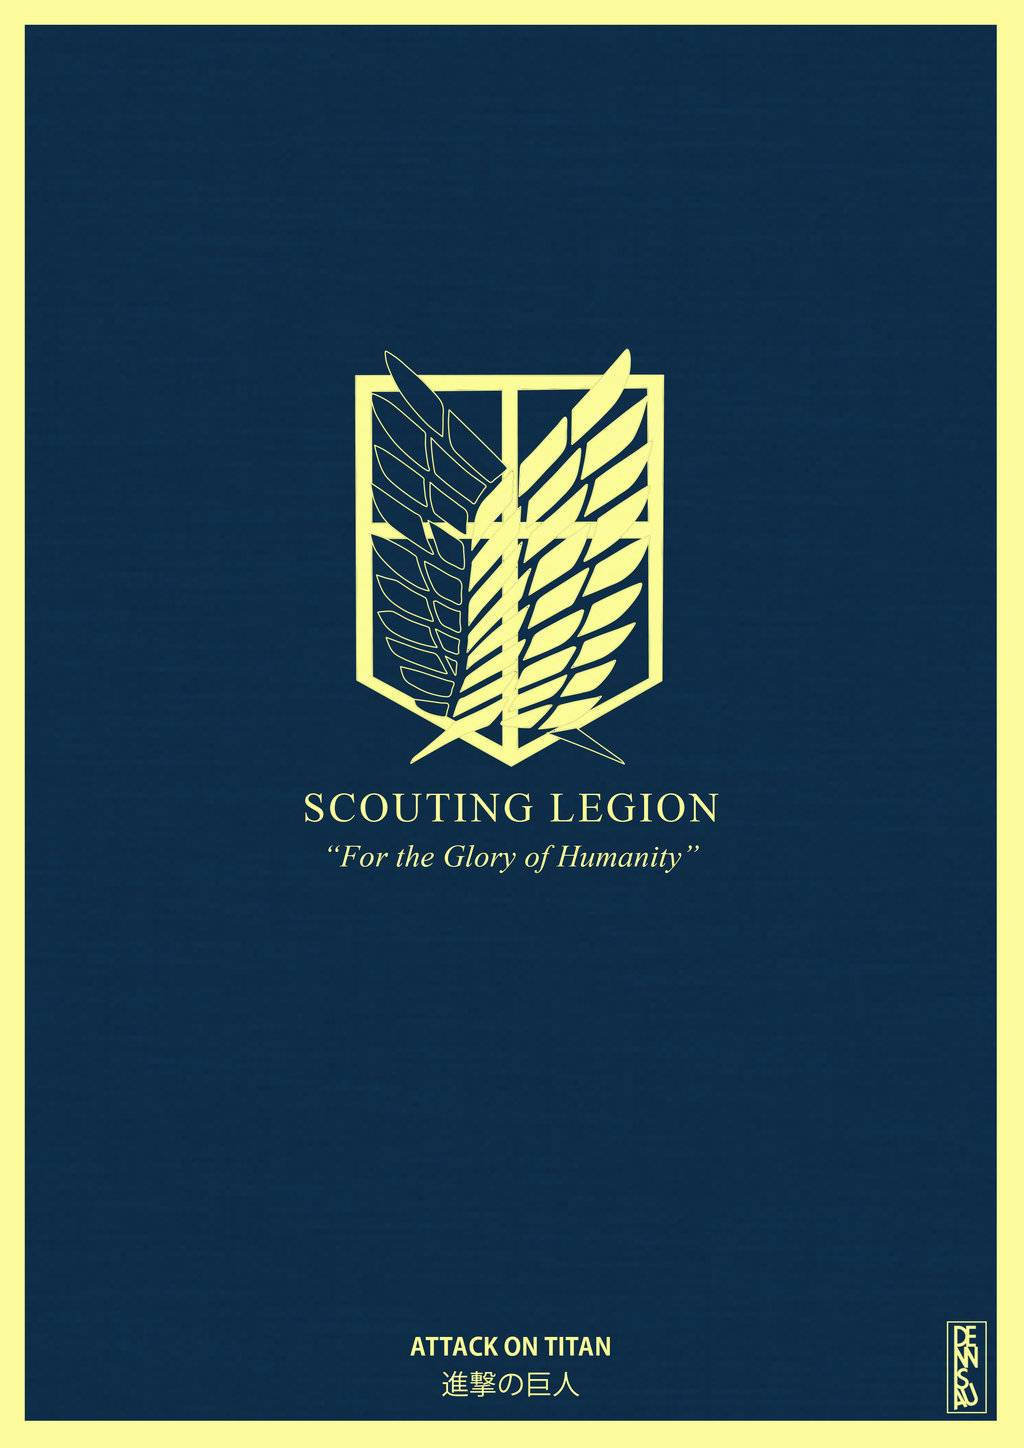 Scoutinglegion Logo (erkundungstrupp-logo) Attack On Titan (angriff Auf Titan) Iphone Wallpaper